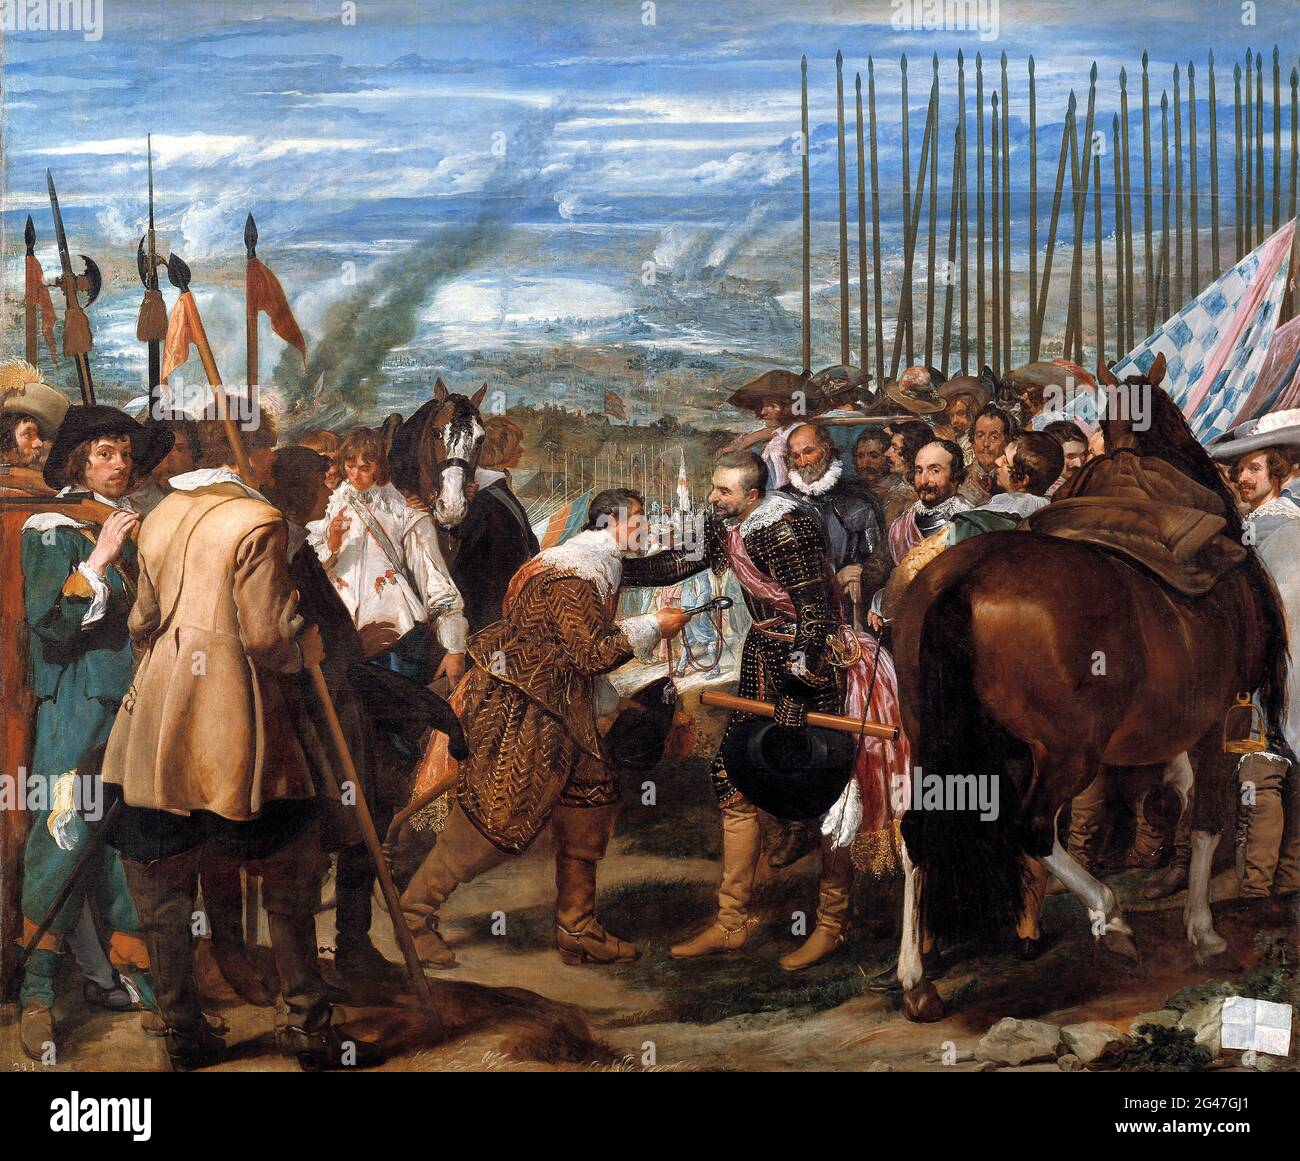 La capitulation de Breda (la rendición de Breda) par Diego Velazquez (1599-1660), huile sur toile, c.1635 Banque D'Images